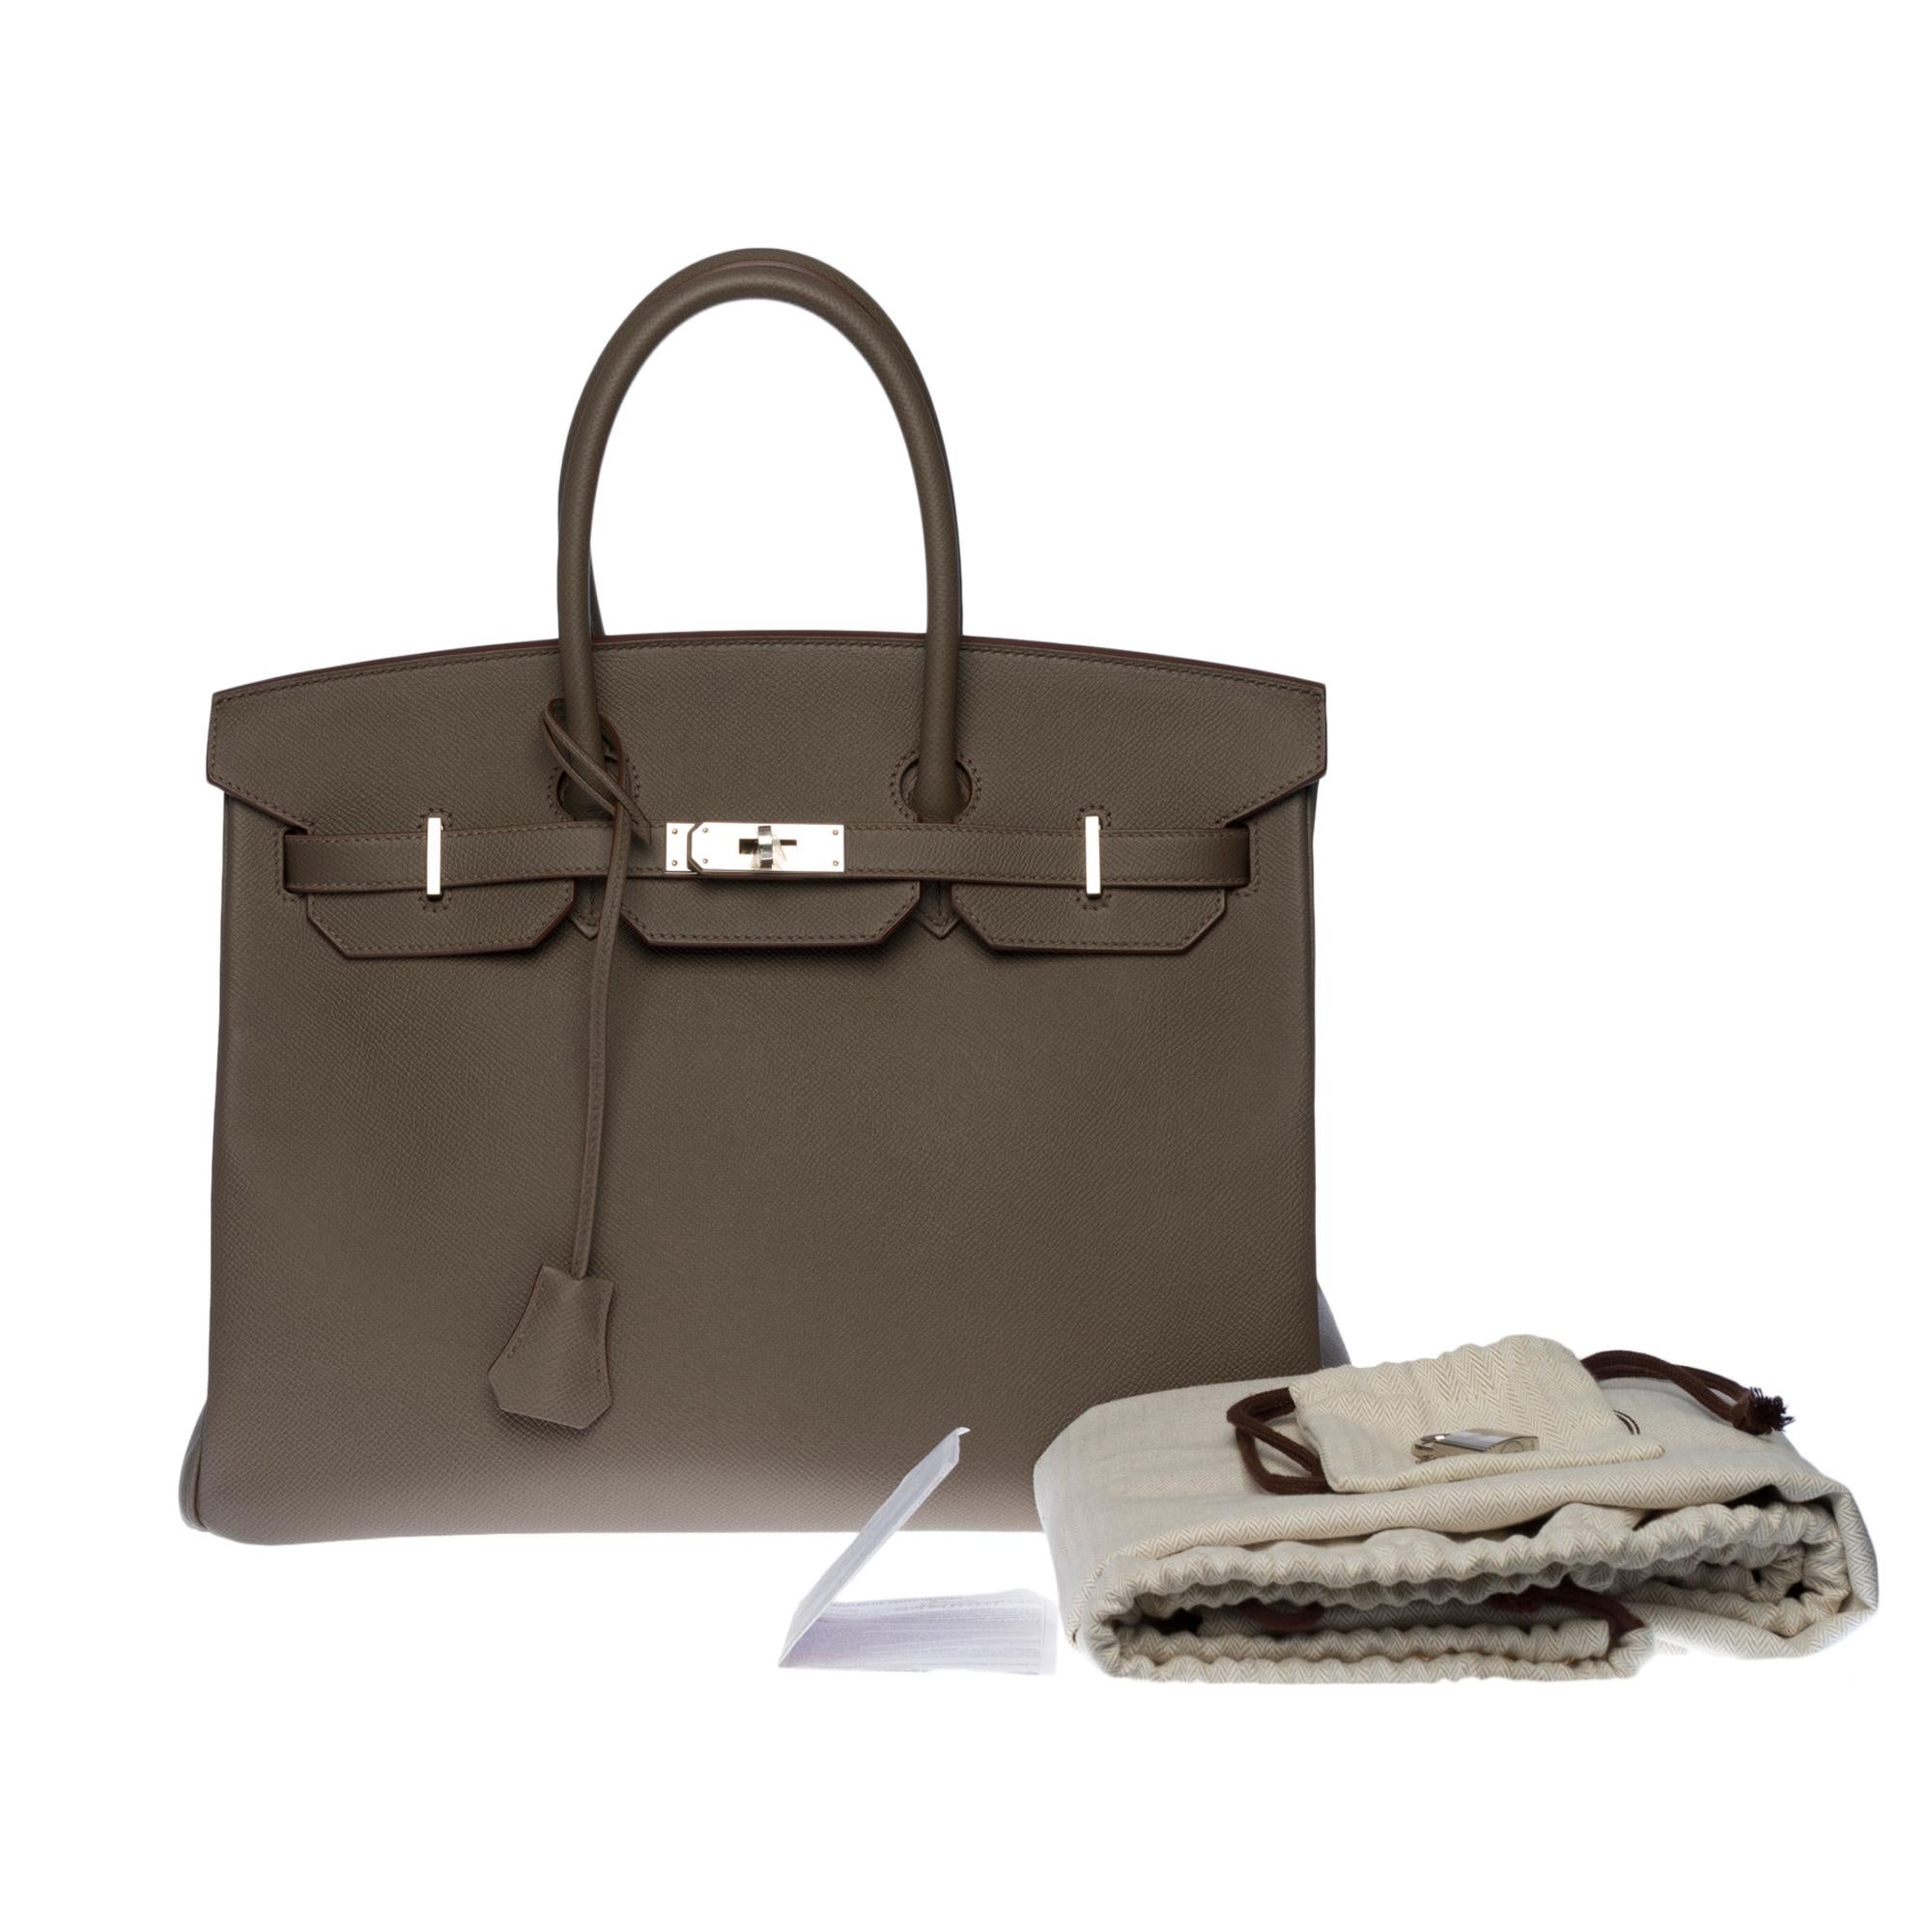 Brand New -Full set-Hermès Birkin 35 handbag in Etain Epsom leather, SHW 5